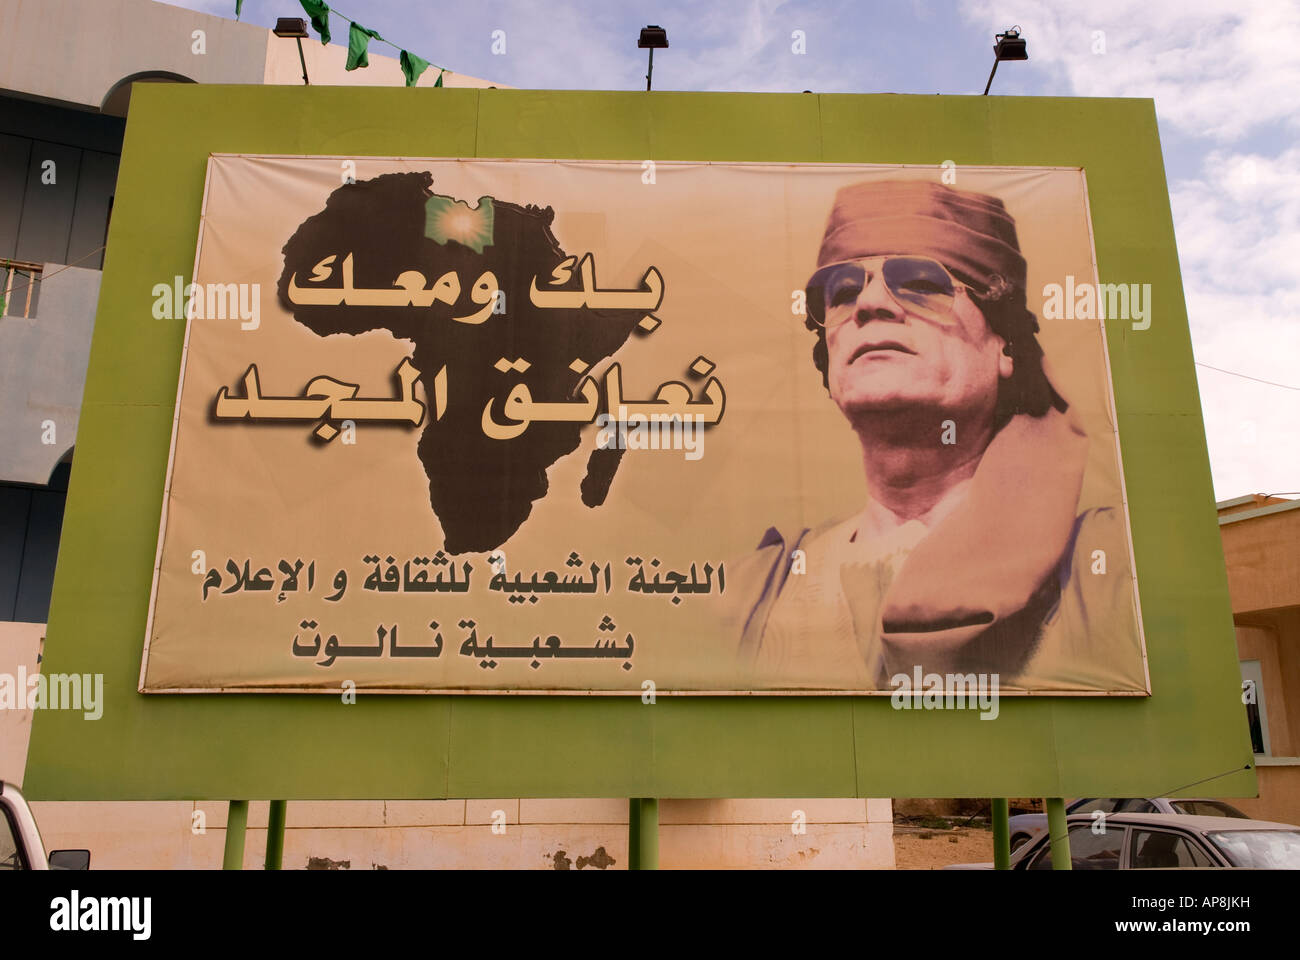 Propaganda poster for former Libyan leader Muammar Qaddafi, Nalut, Libya, north Africa. Stock Photo